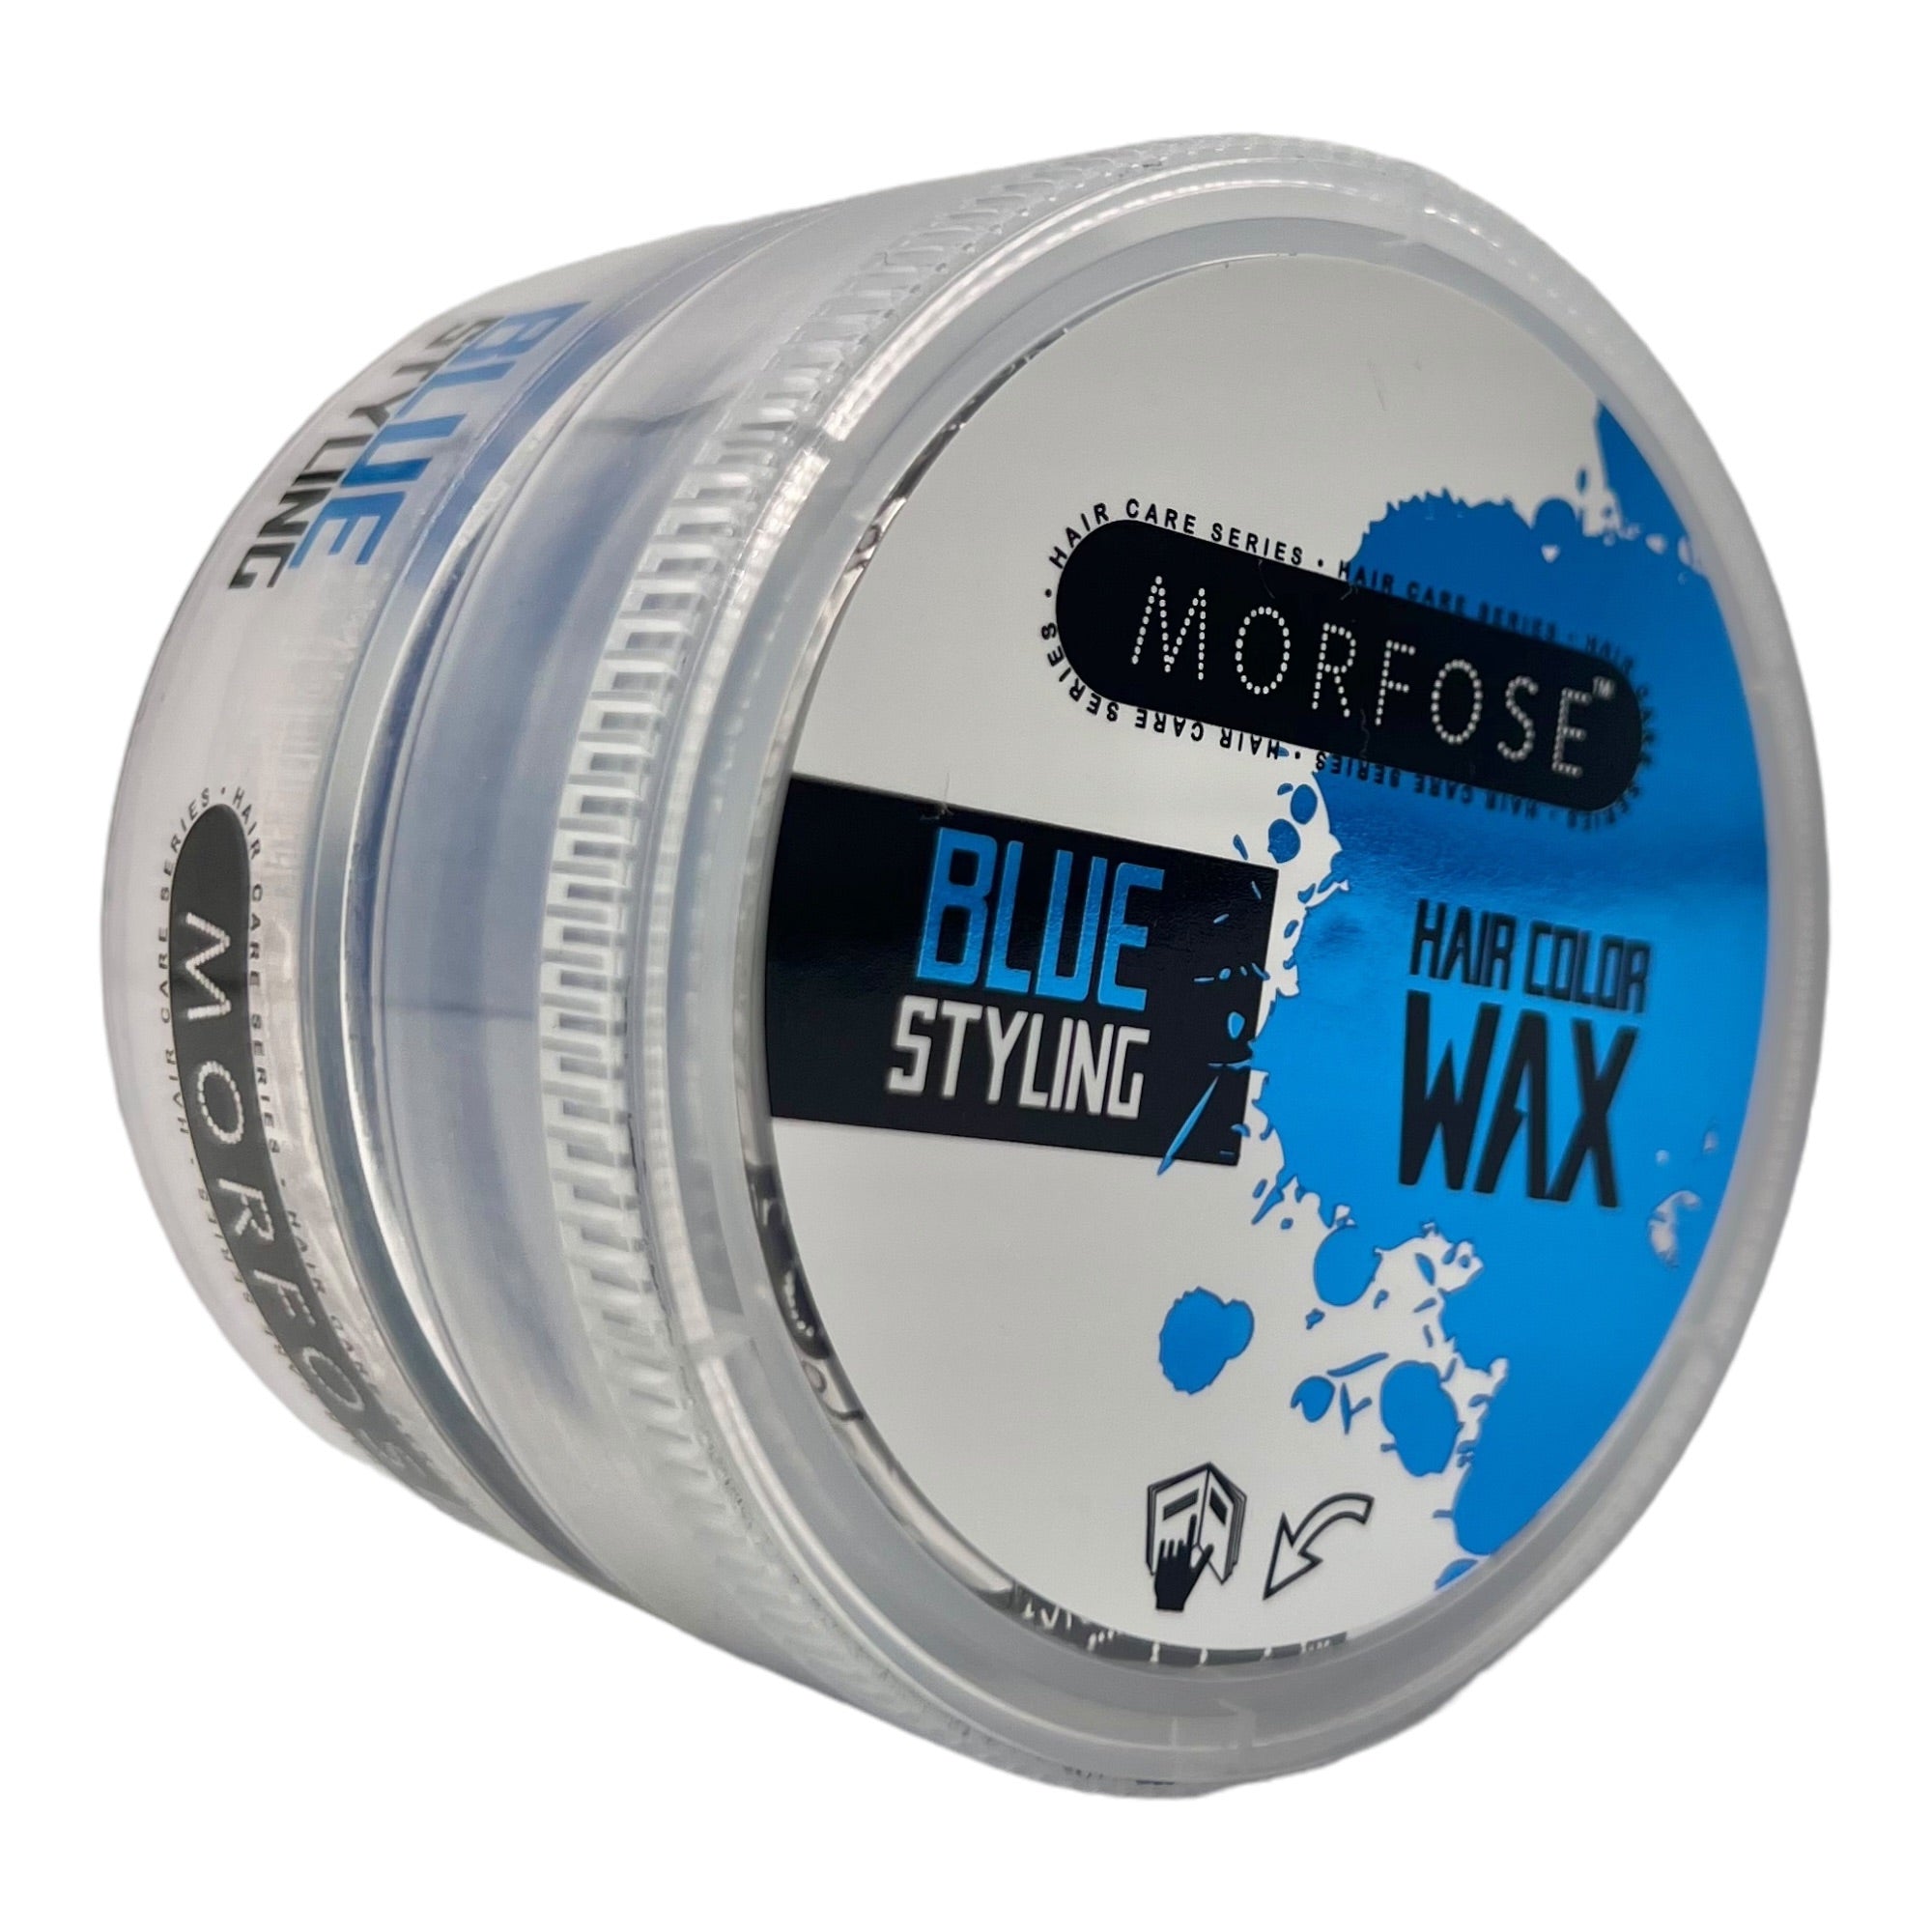 Morfose - Hair Colour Wax Blue Styling 100ml